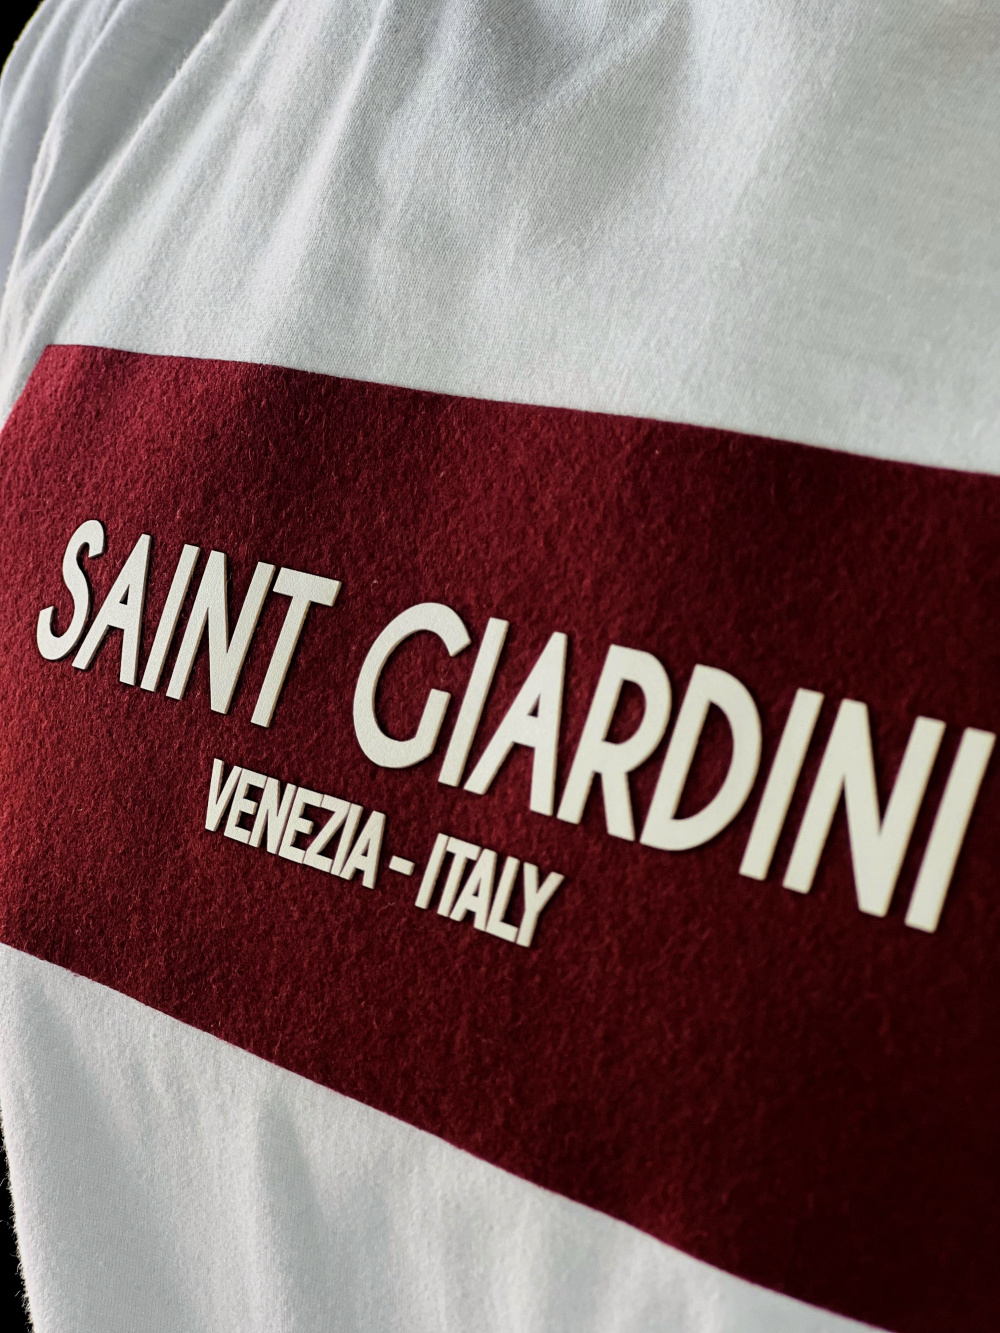 Camisa Masculina Saint Giardini Comfort linho - LE SOARES STORE